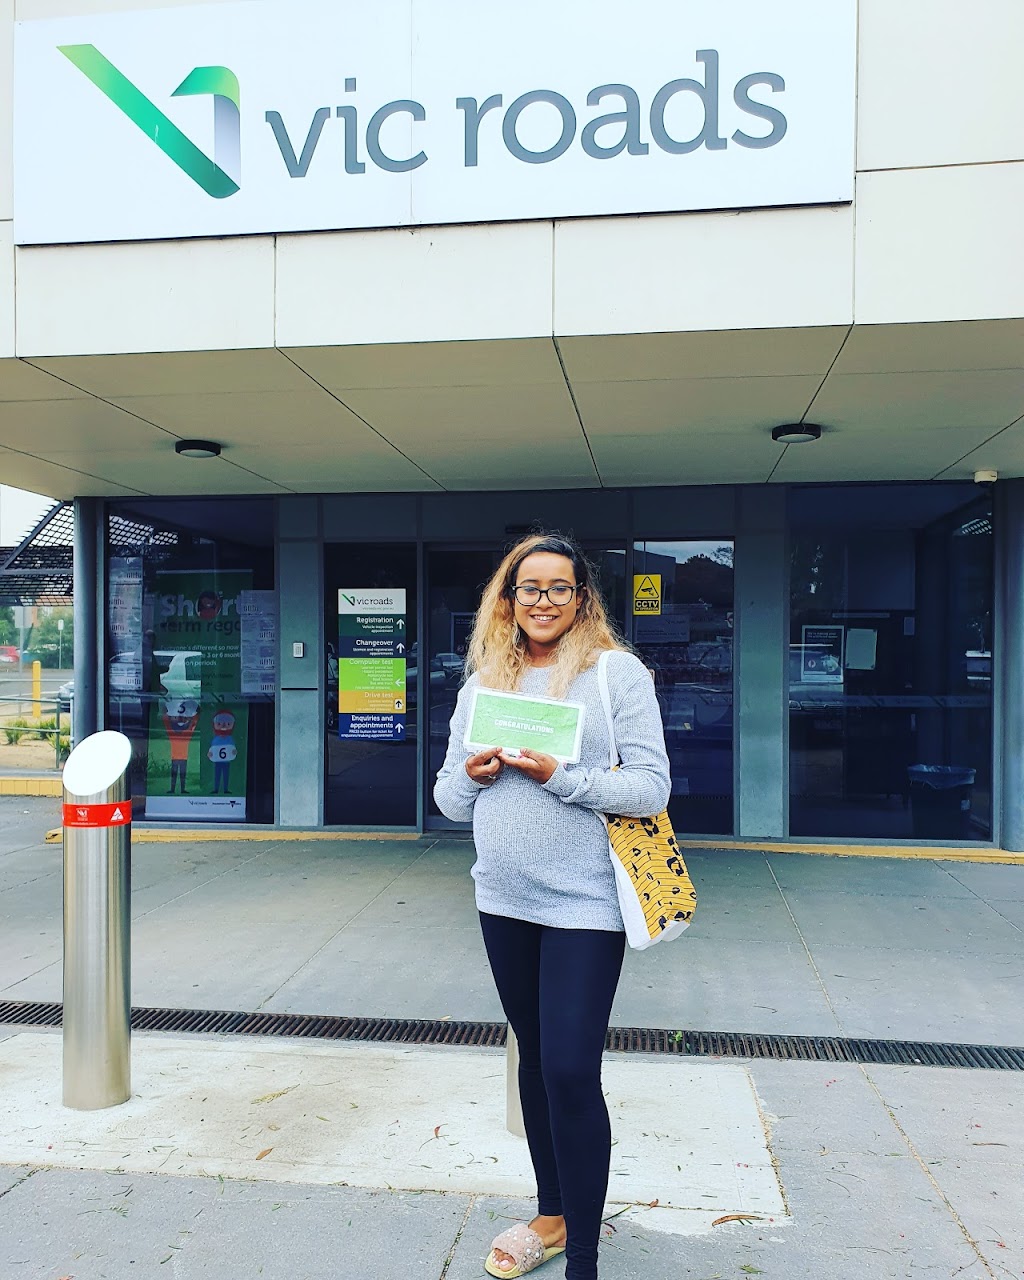 Vicky Driving School | 25 Heywood Cres, Broadmeadows VIC 3047, Australia | Phone: 0452 061 221